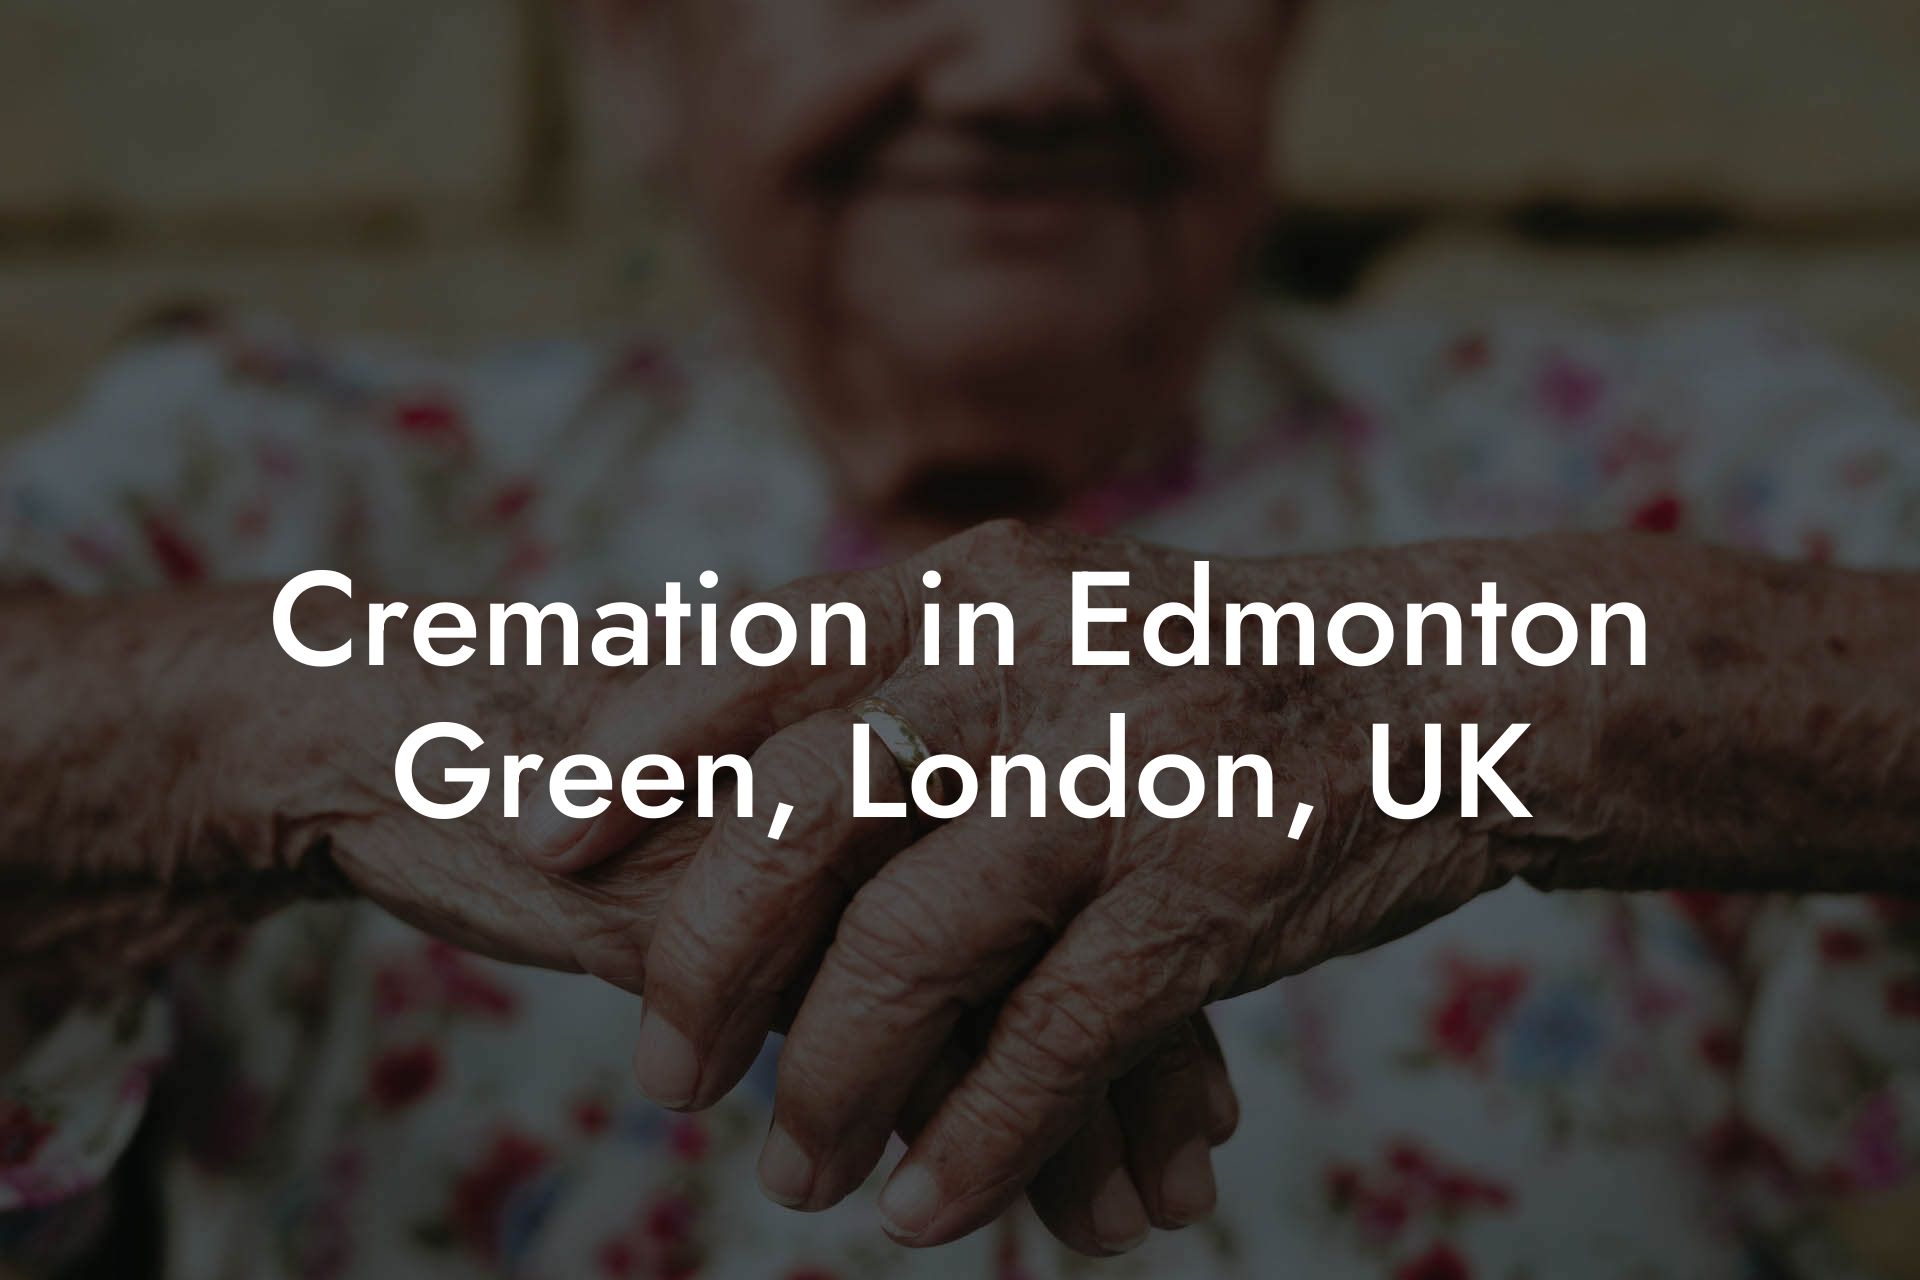 Cremation in Edmonton Green, London, UK